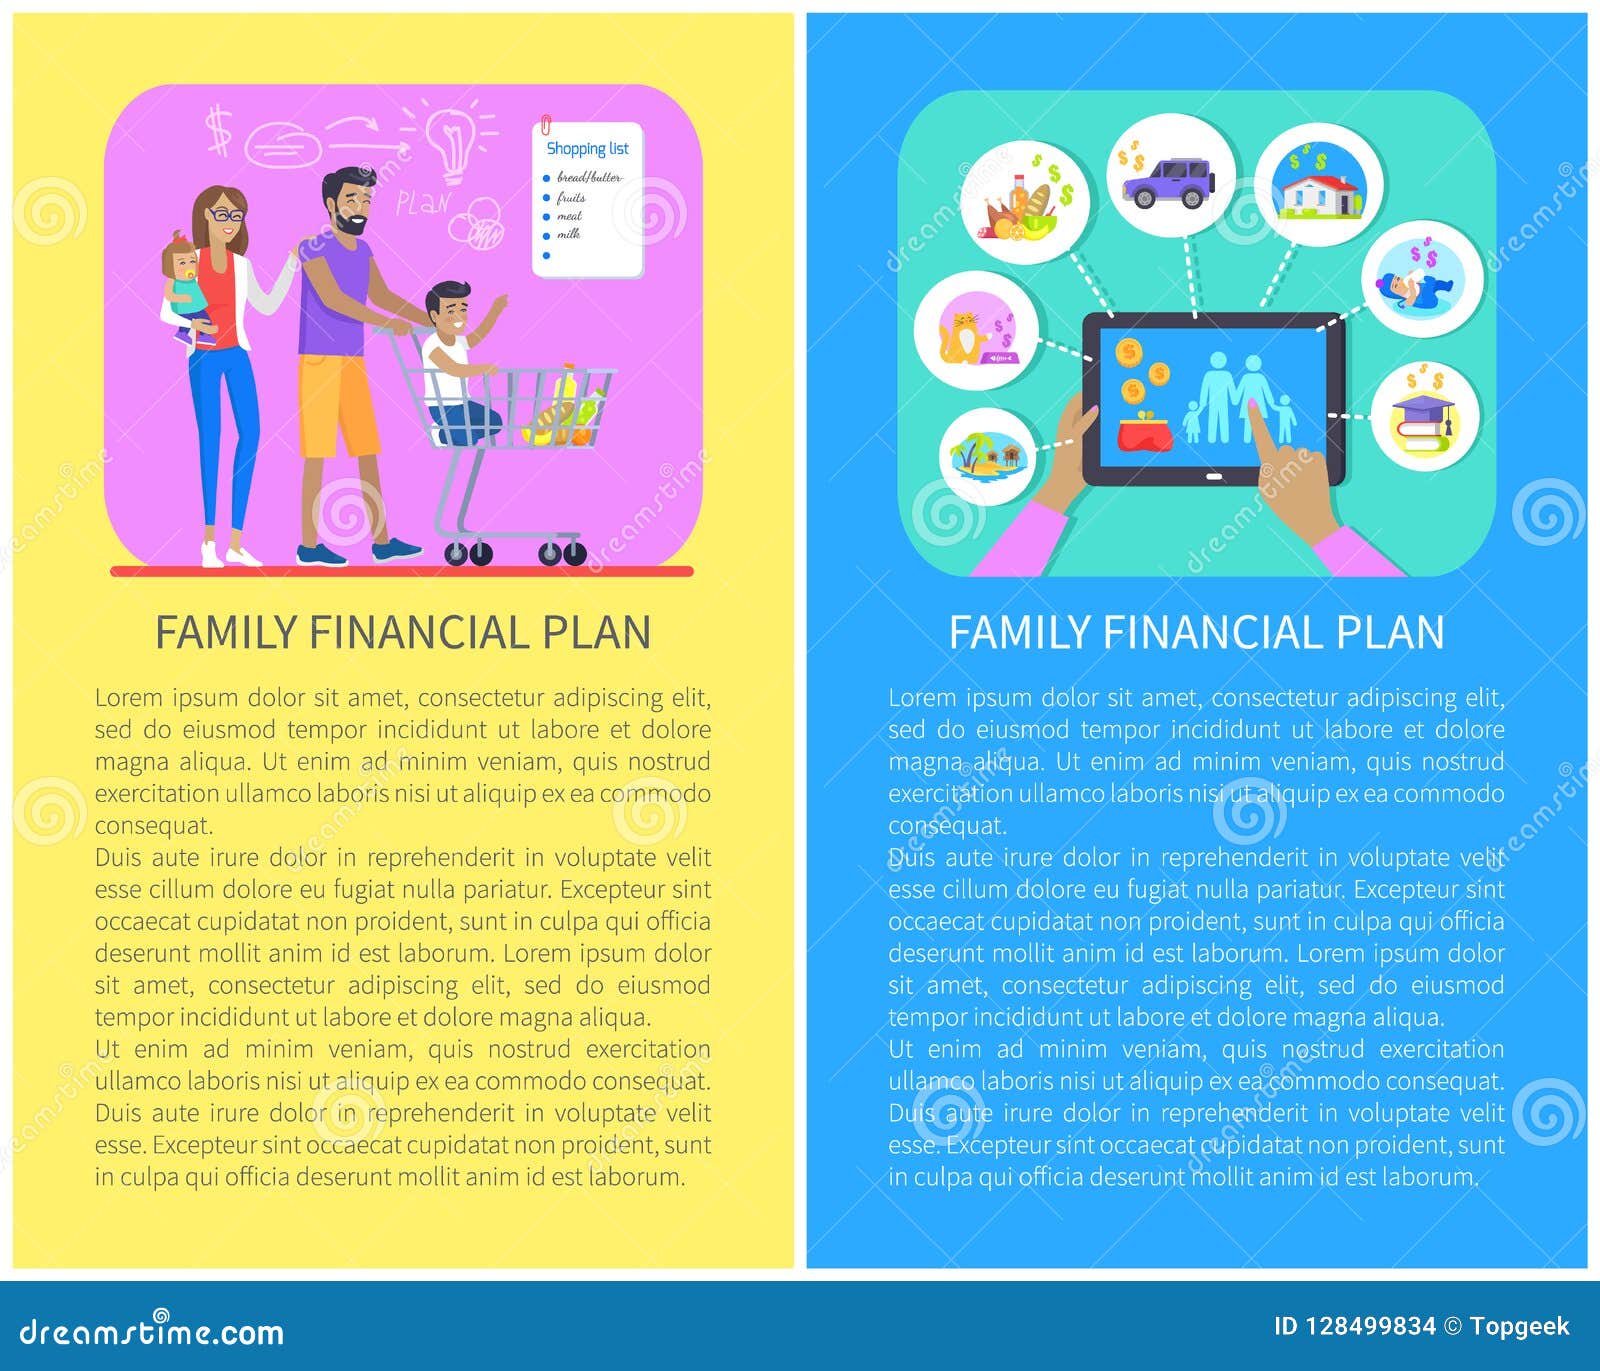 Download Family Financial Plan Idea Vector Illustration Stock Vector - Illustration of bread, book: 128499834